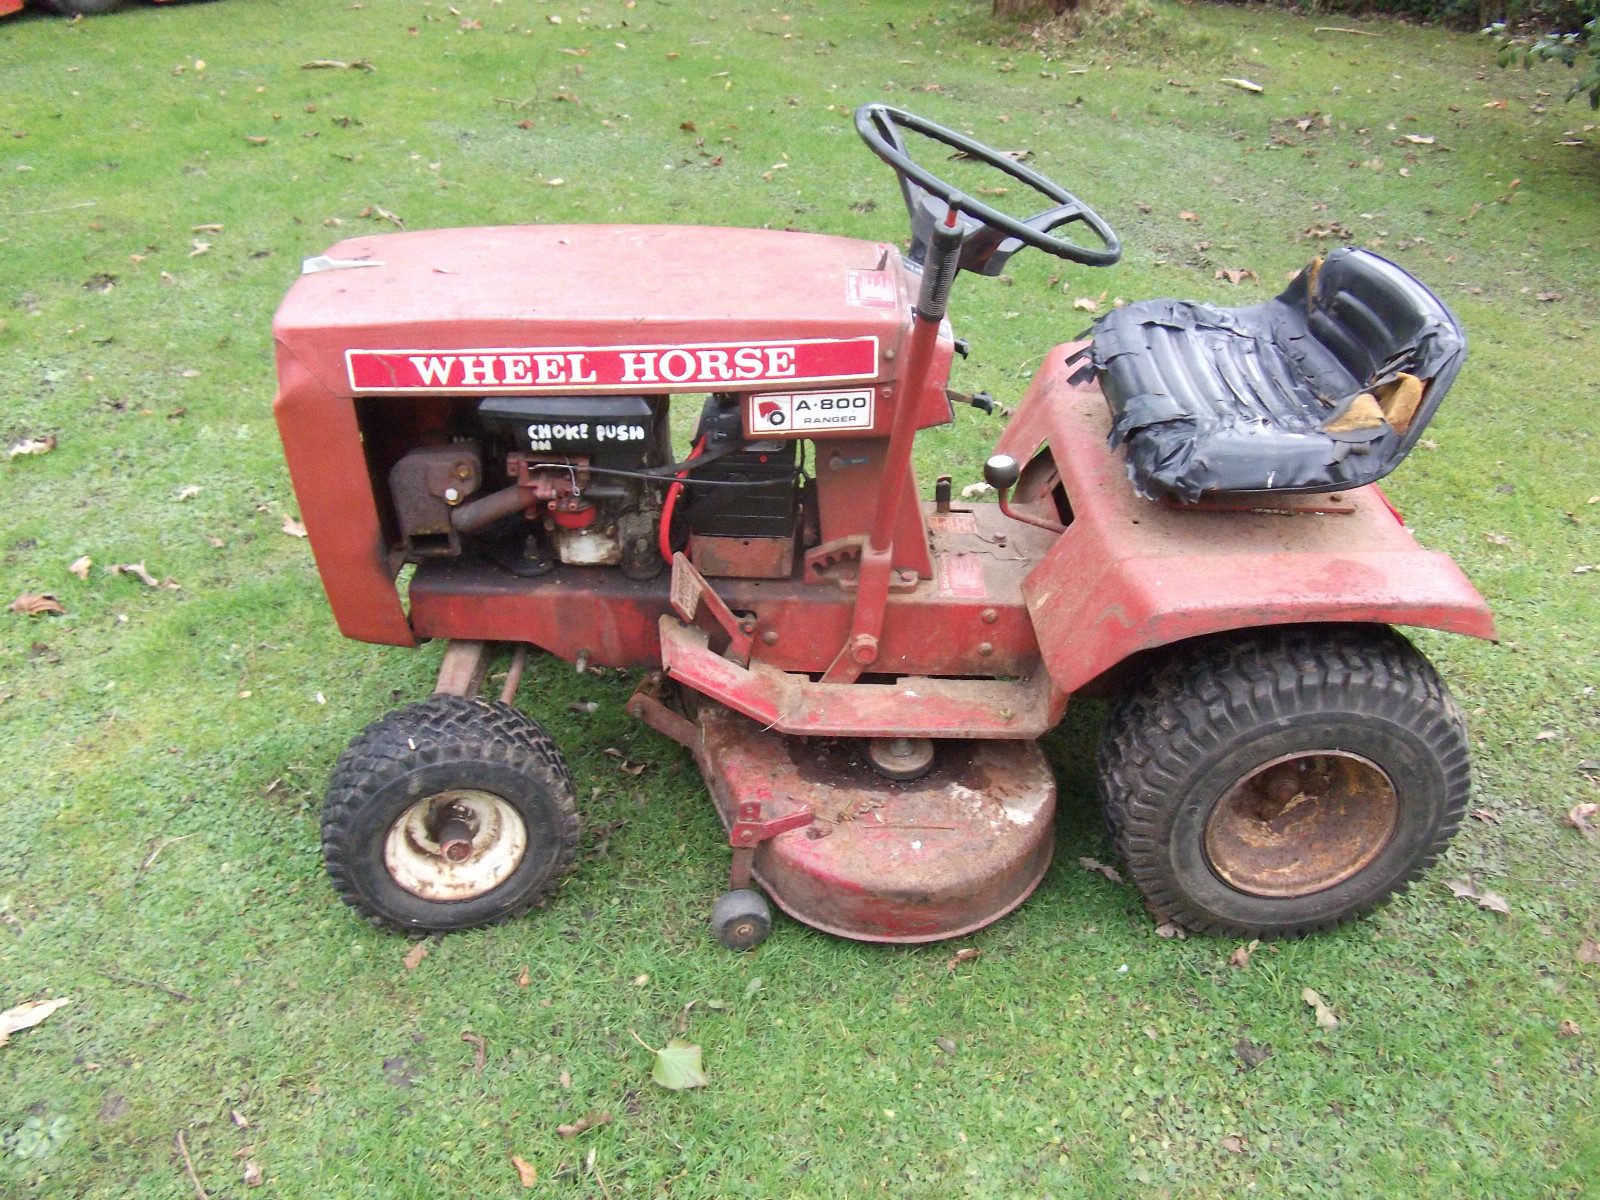 800 Ranger restoration - Wheel Horse Tractors - RedSquare Wheel Horse ...